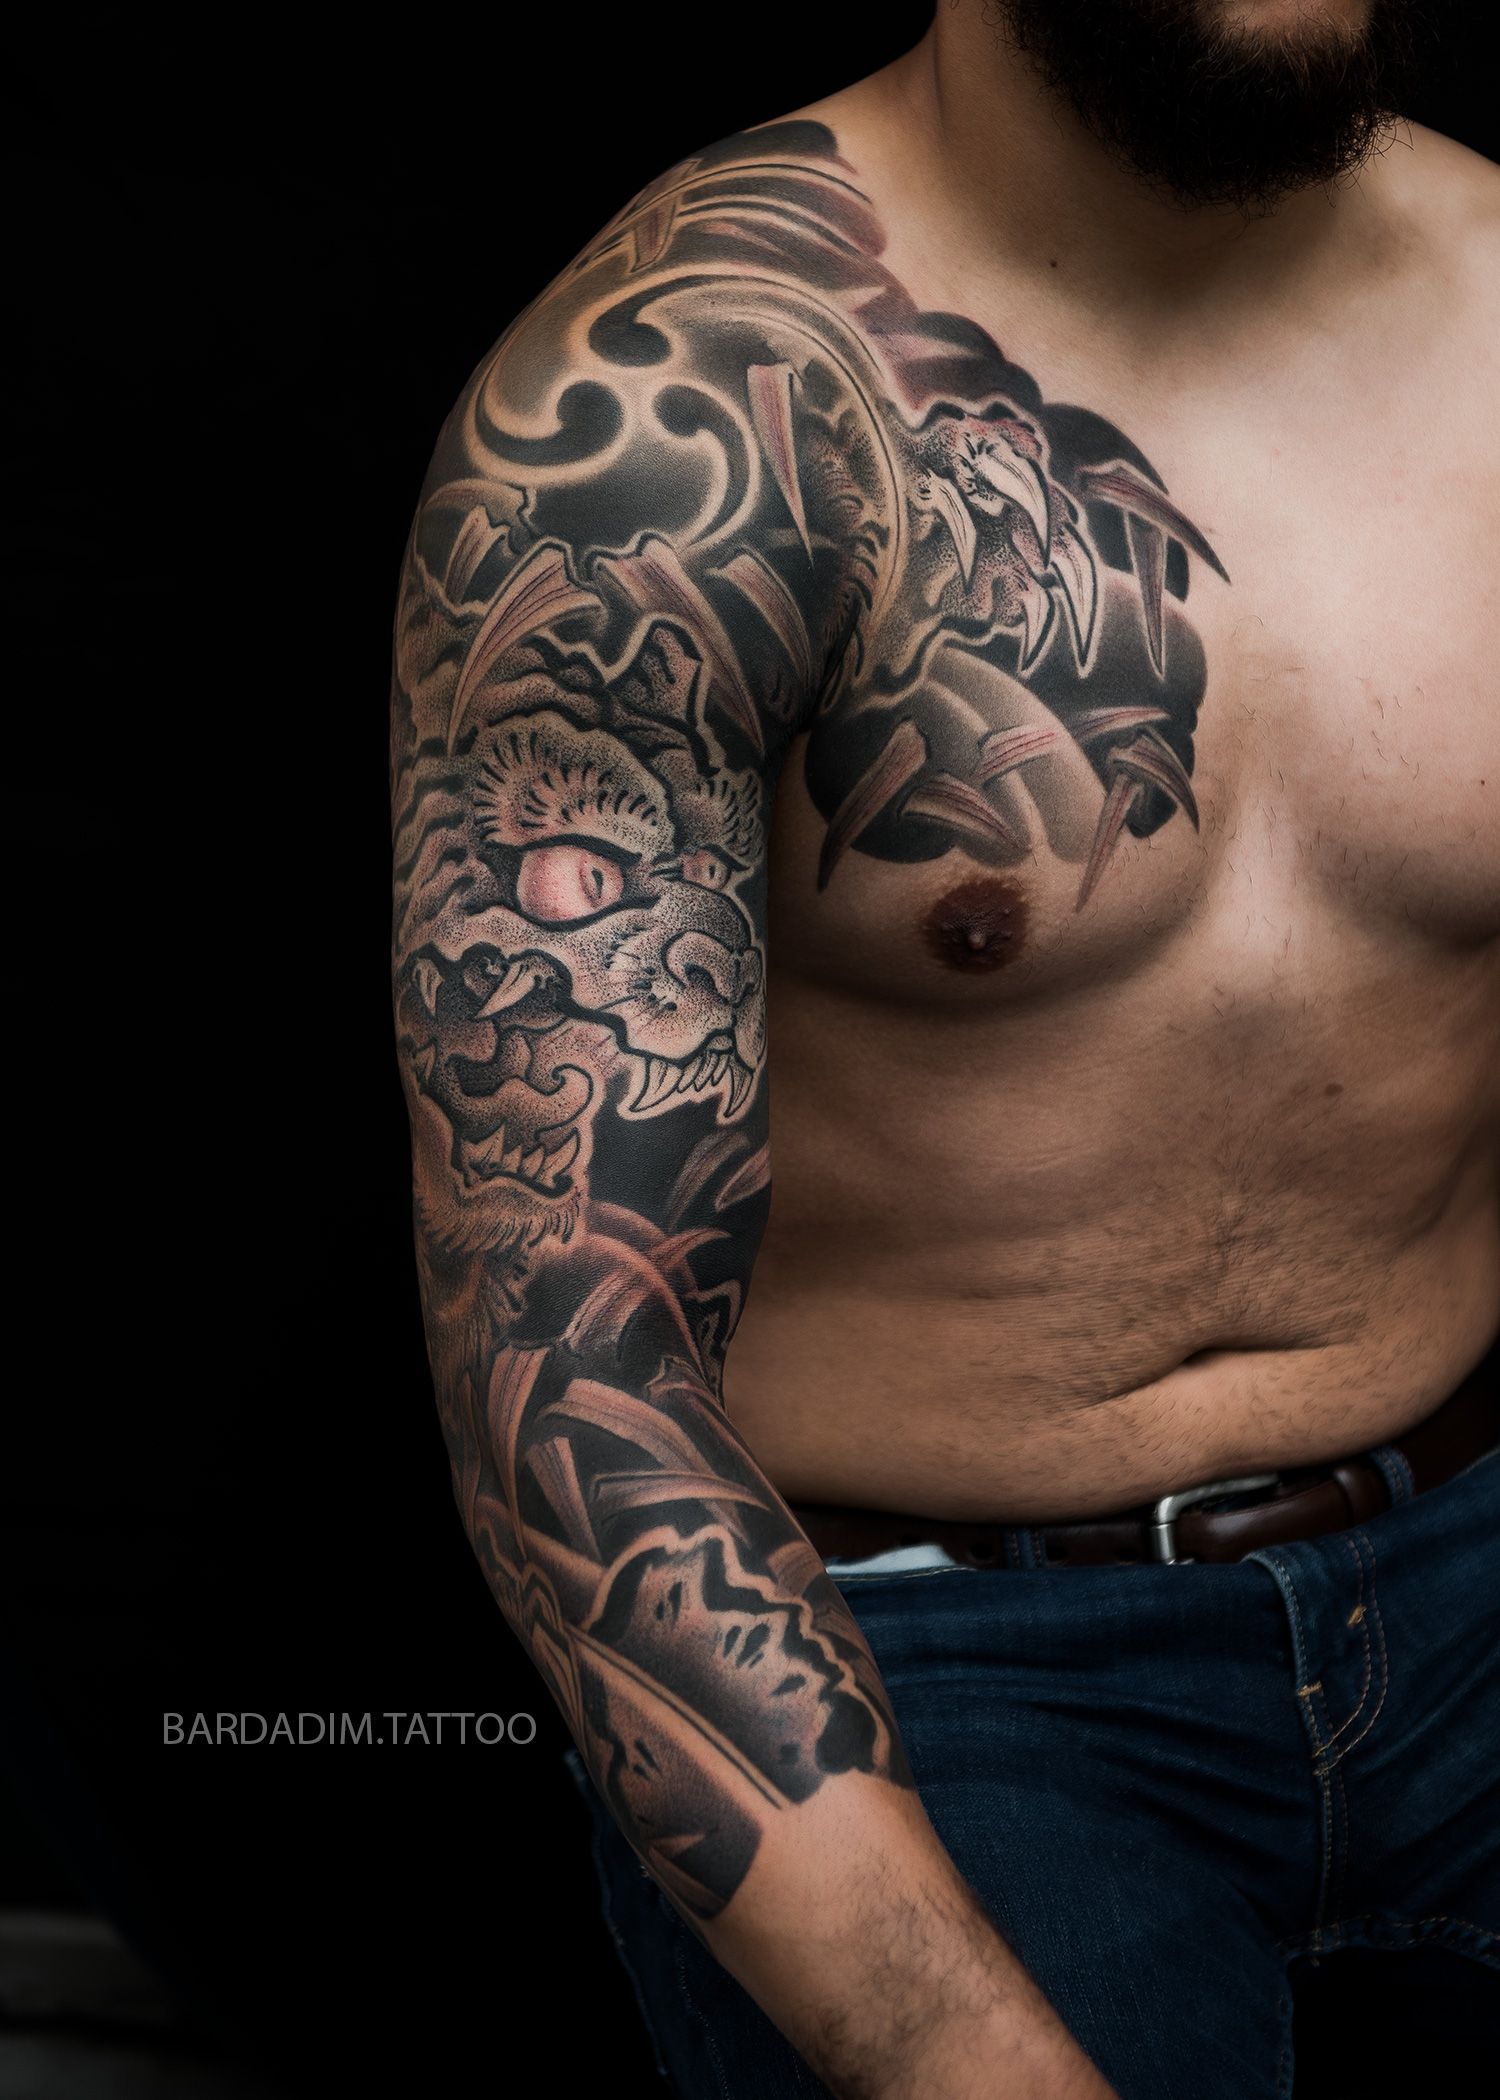 Tiger and Bamboo. Tattoo sleeve by George Bardadim